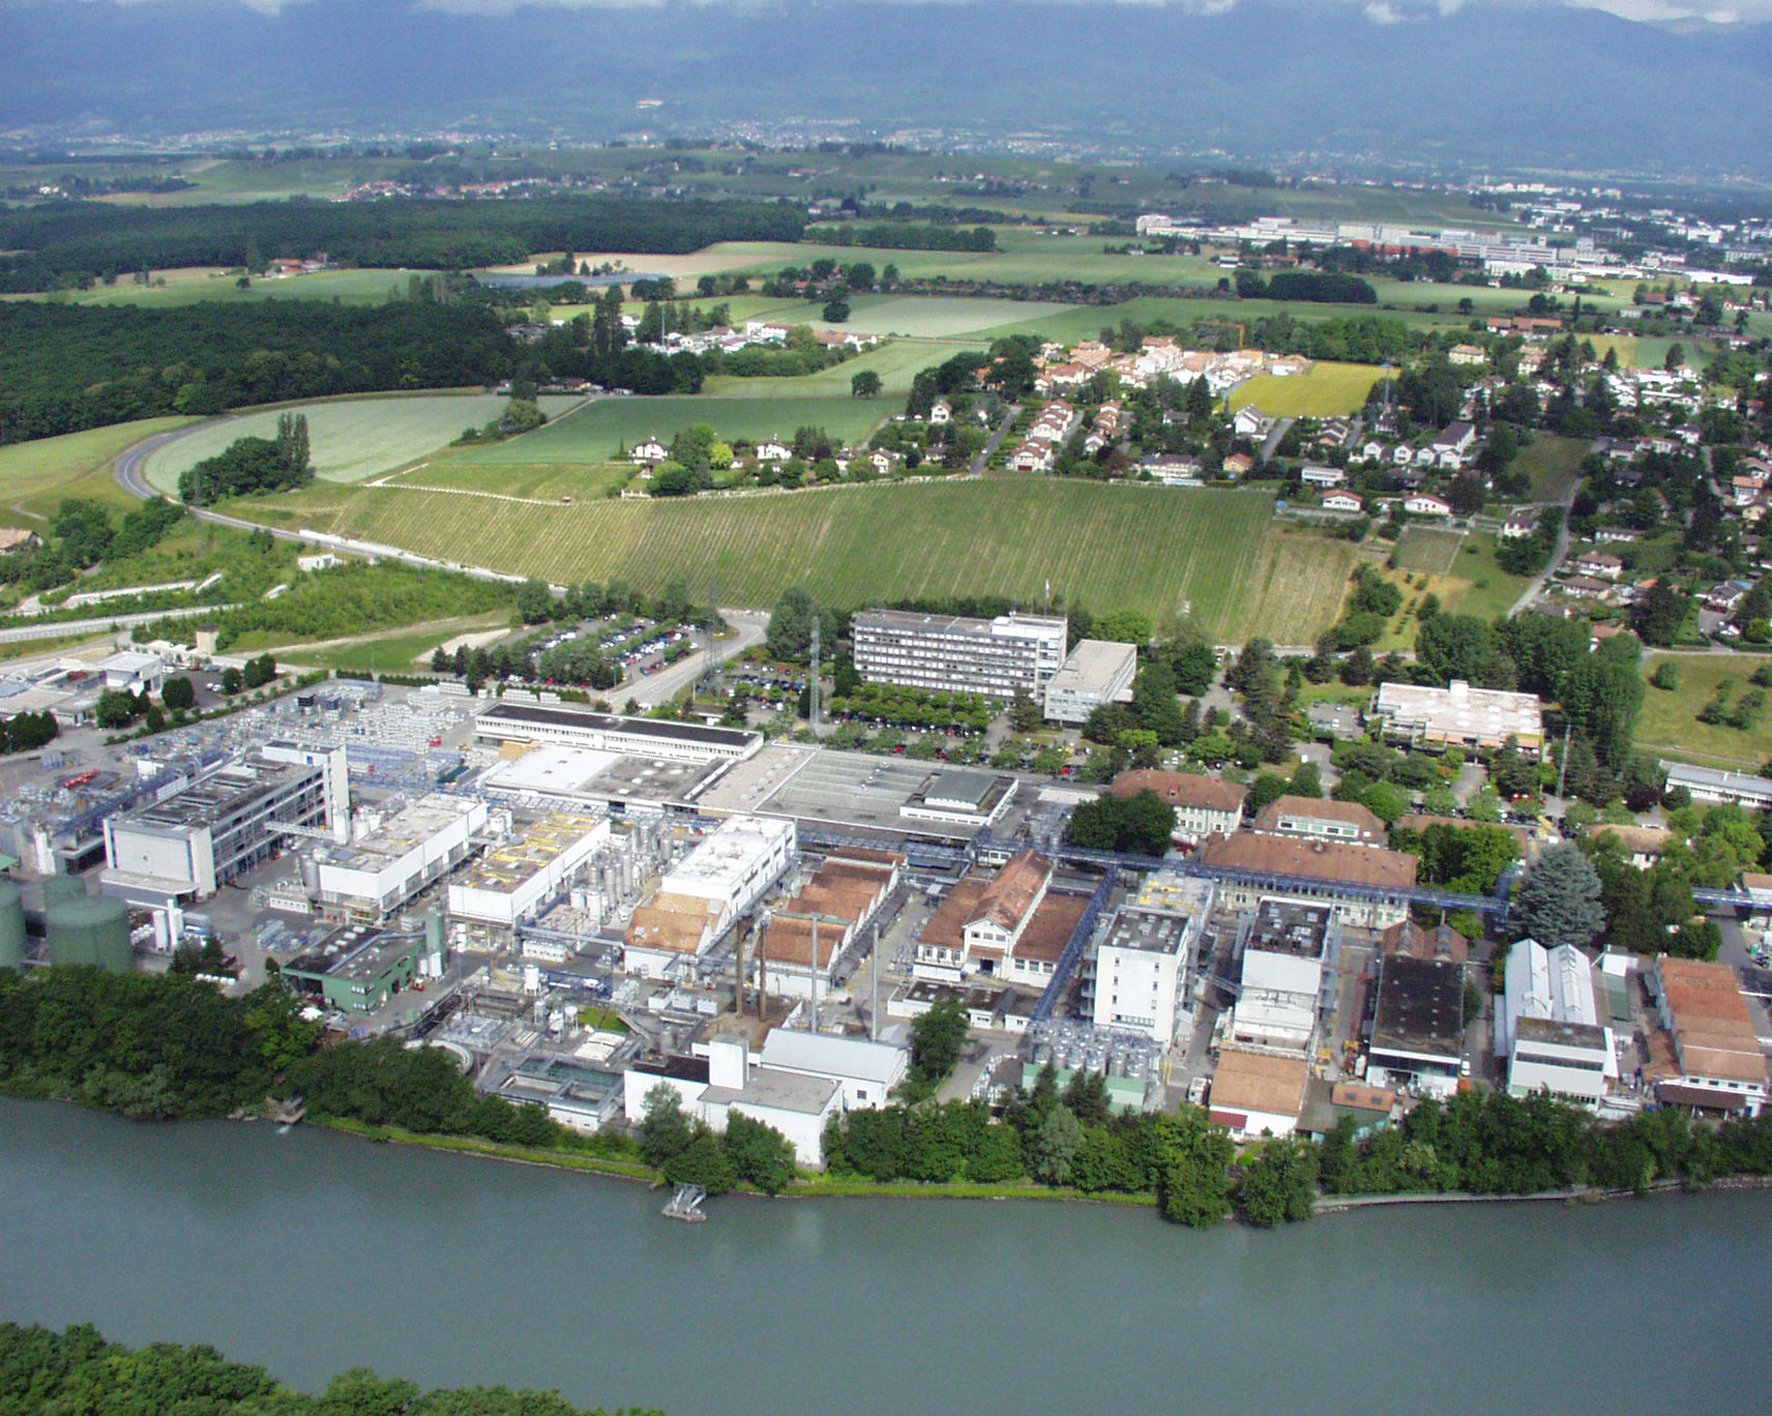 Givaudan's corporate headquarters in Vernier, Switzerland